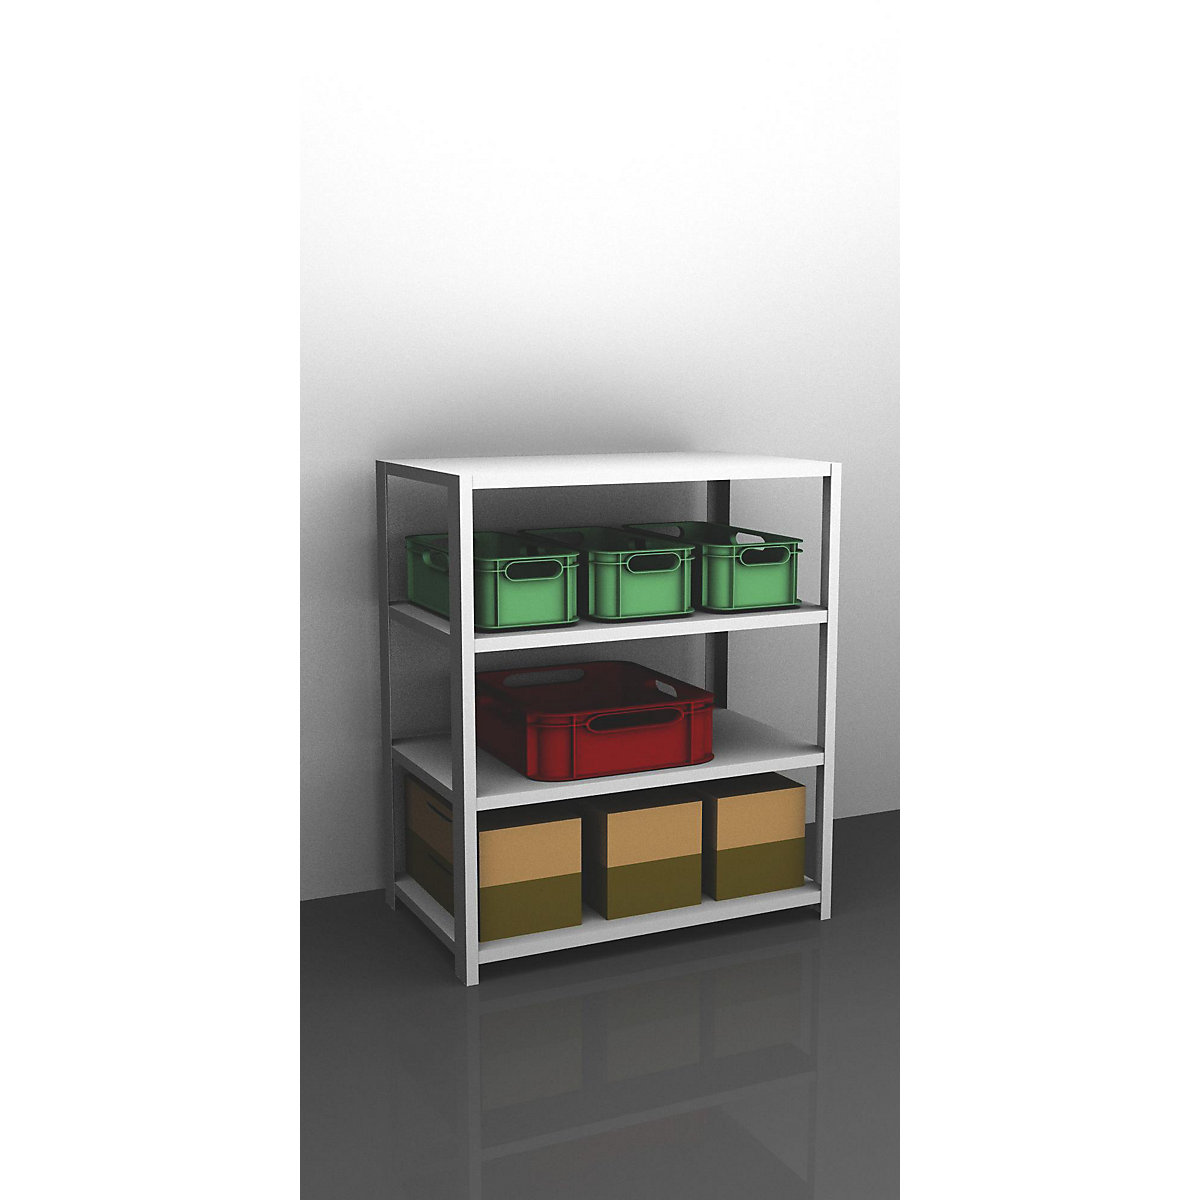 Bolt-together shelf unit, light duty, plastic coated – eurokraft pro, shelf unit height 1500 mm, shelf width 1300 mm, depth 800 mm, standard shelf unit-6